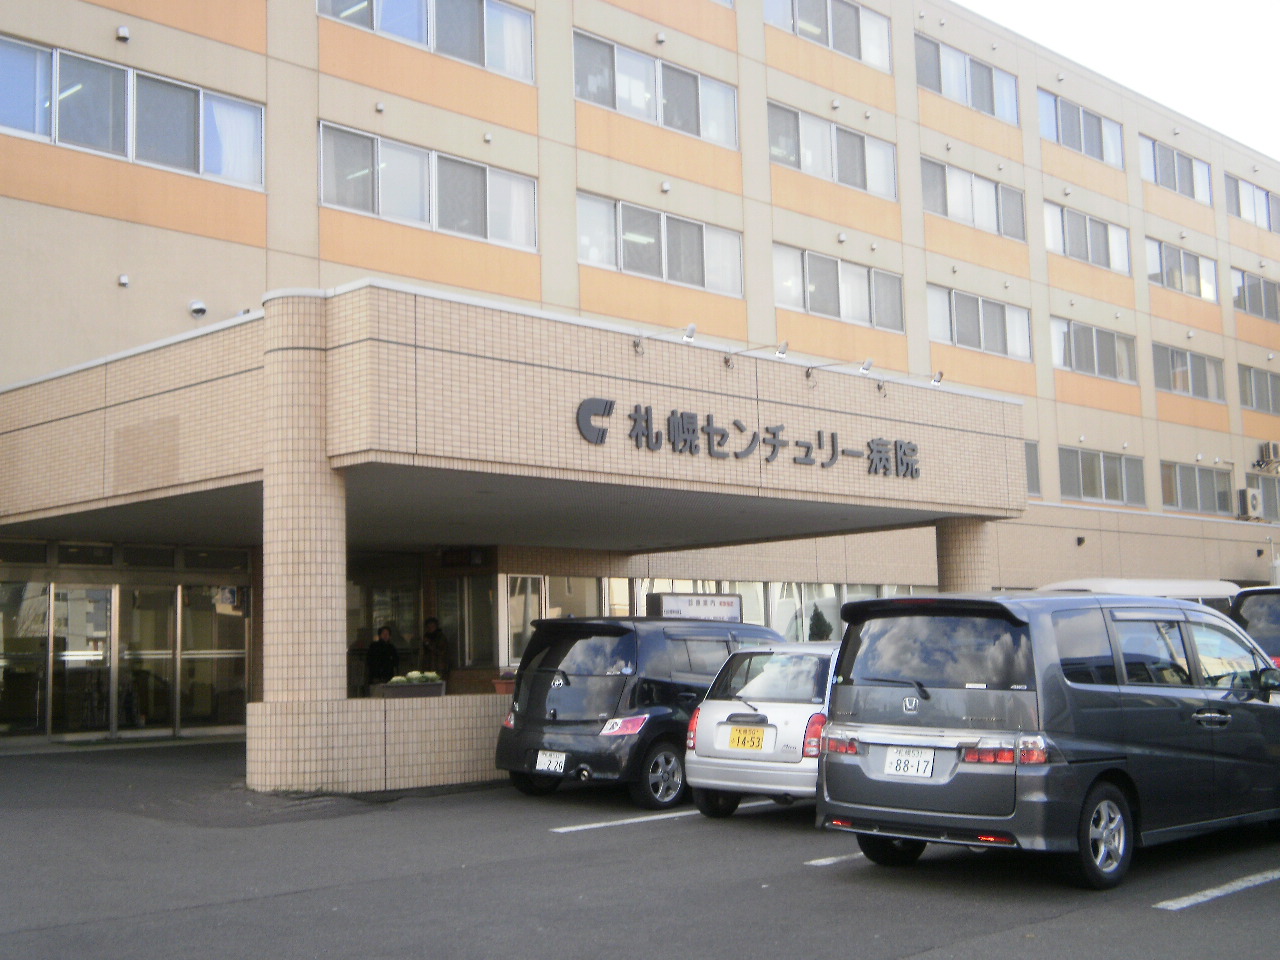 Hospital. 359m until the medical corporation Kikusatokai Sapporo Century Hospital (Hospital)